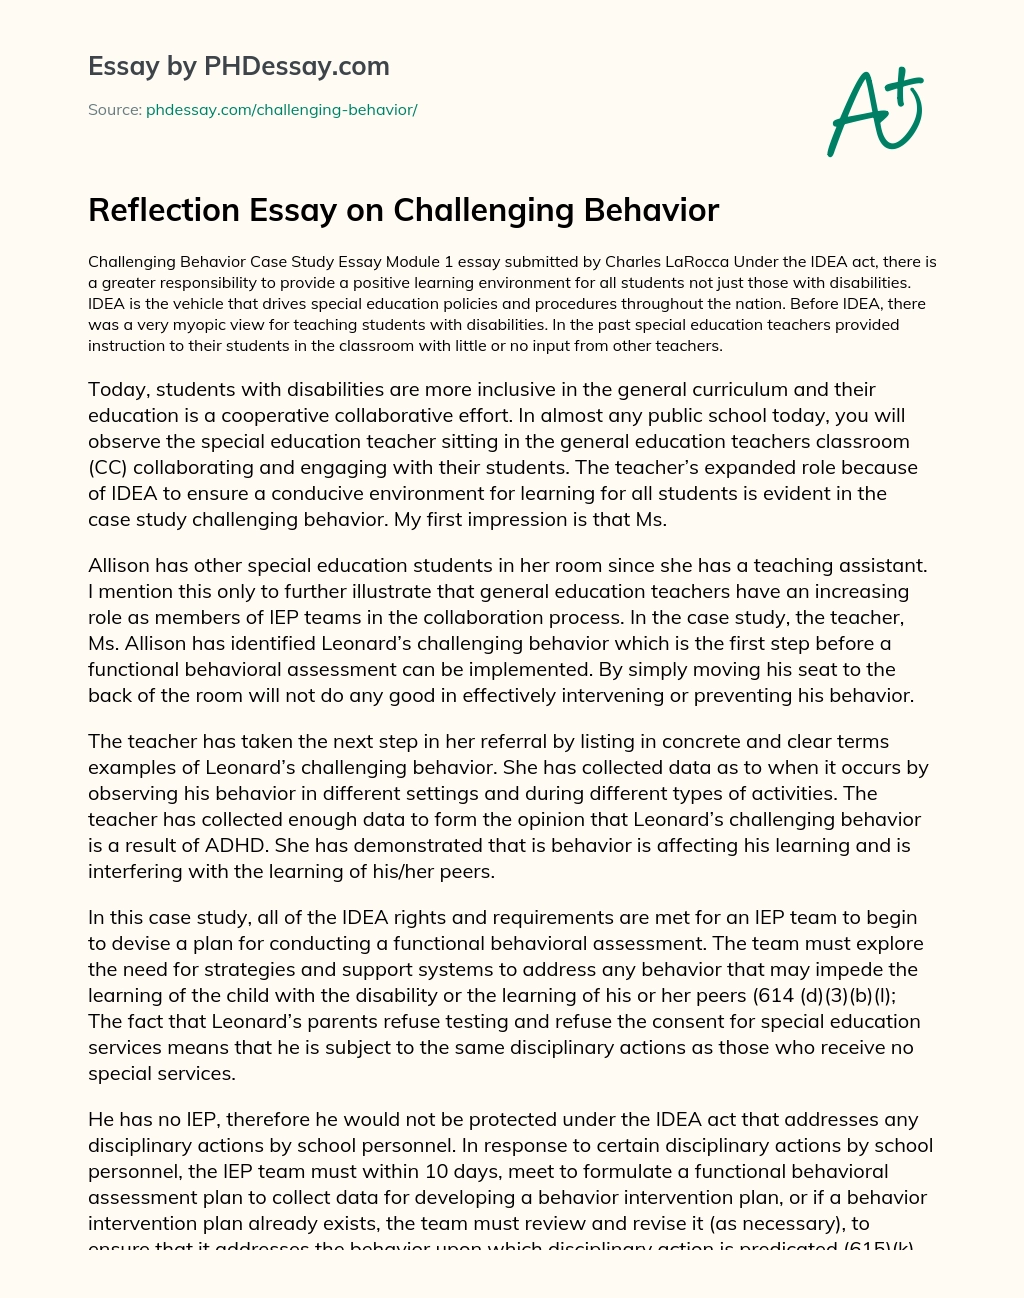 Reflection Essay on Challenging Behavior essay